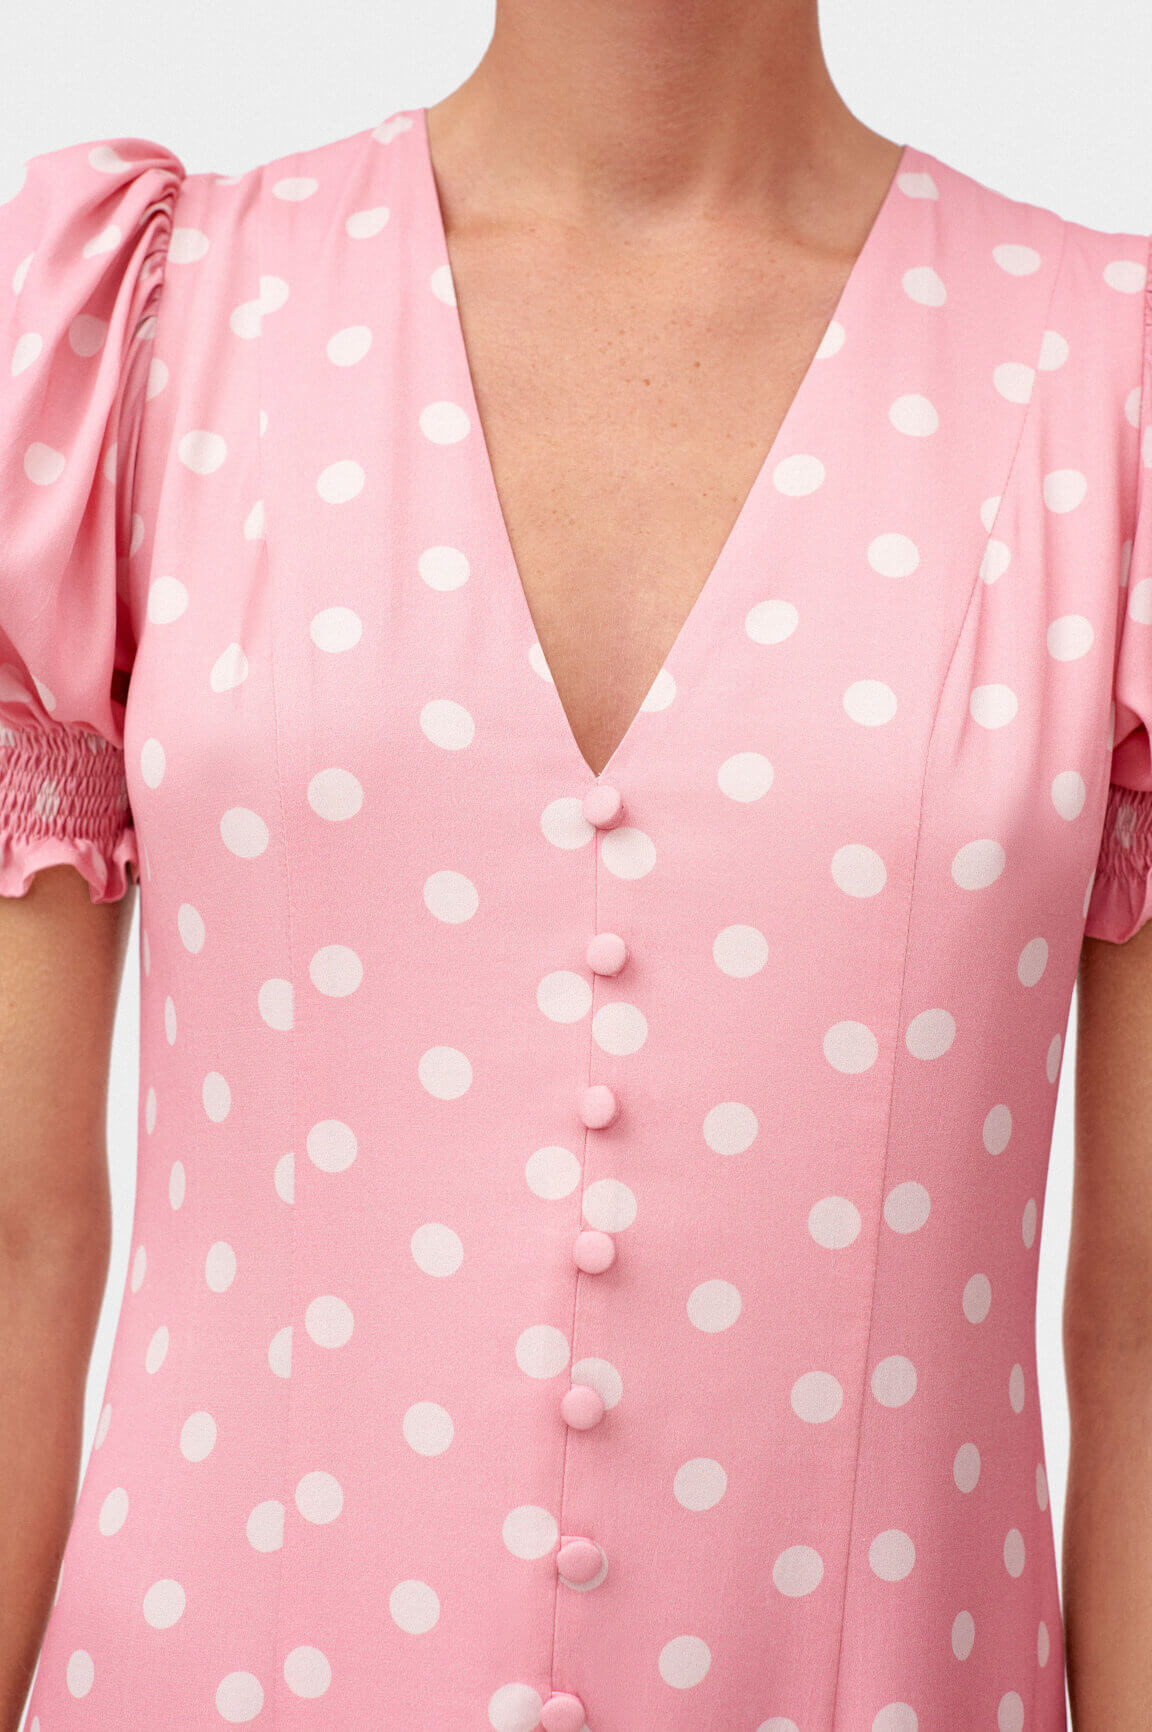 Pink and white polka dress | Women's linen dress by Sleeper